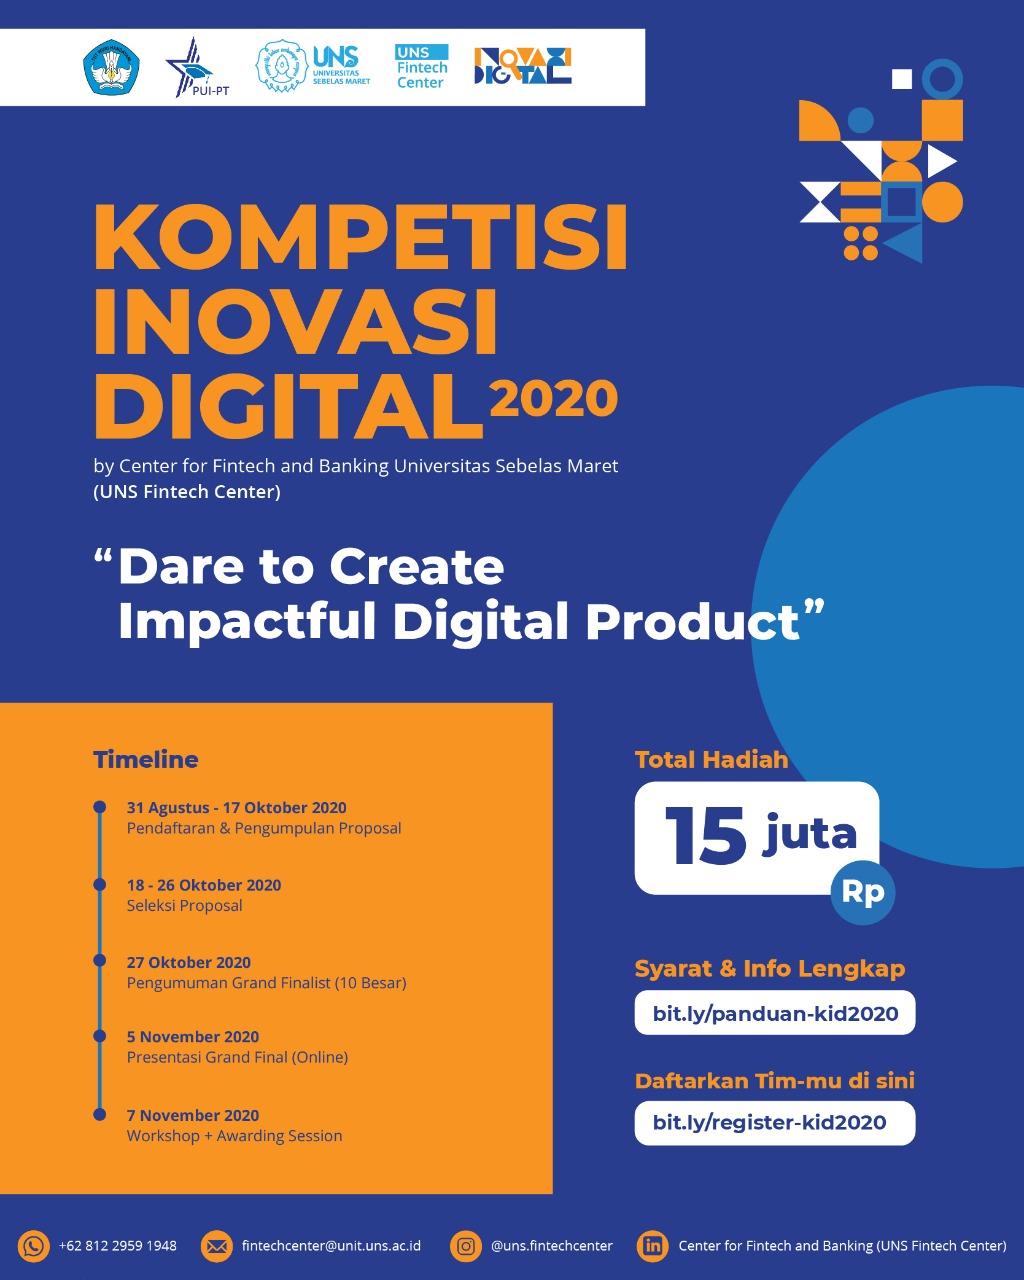 Kompetisi Inovasi Digital (KID) 2020